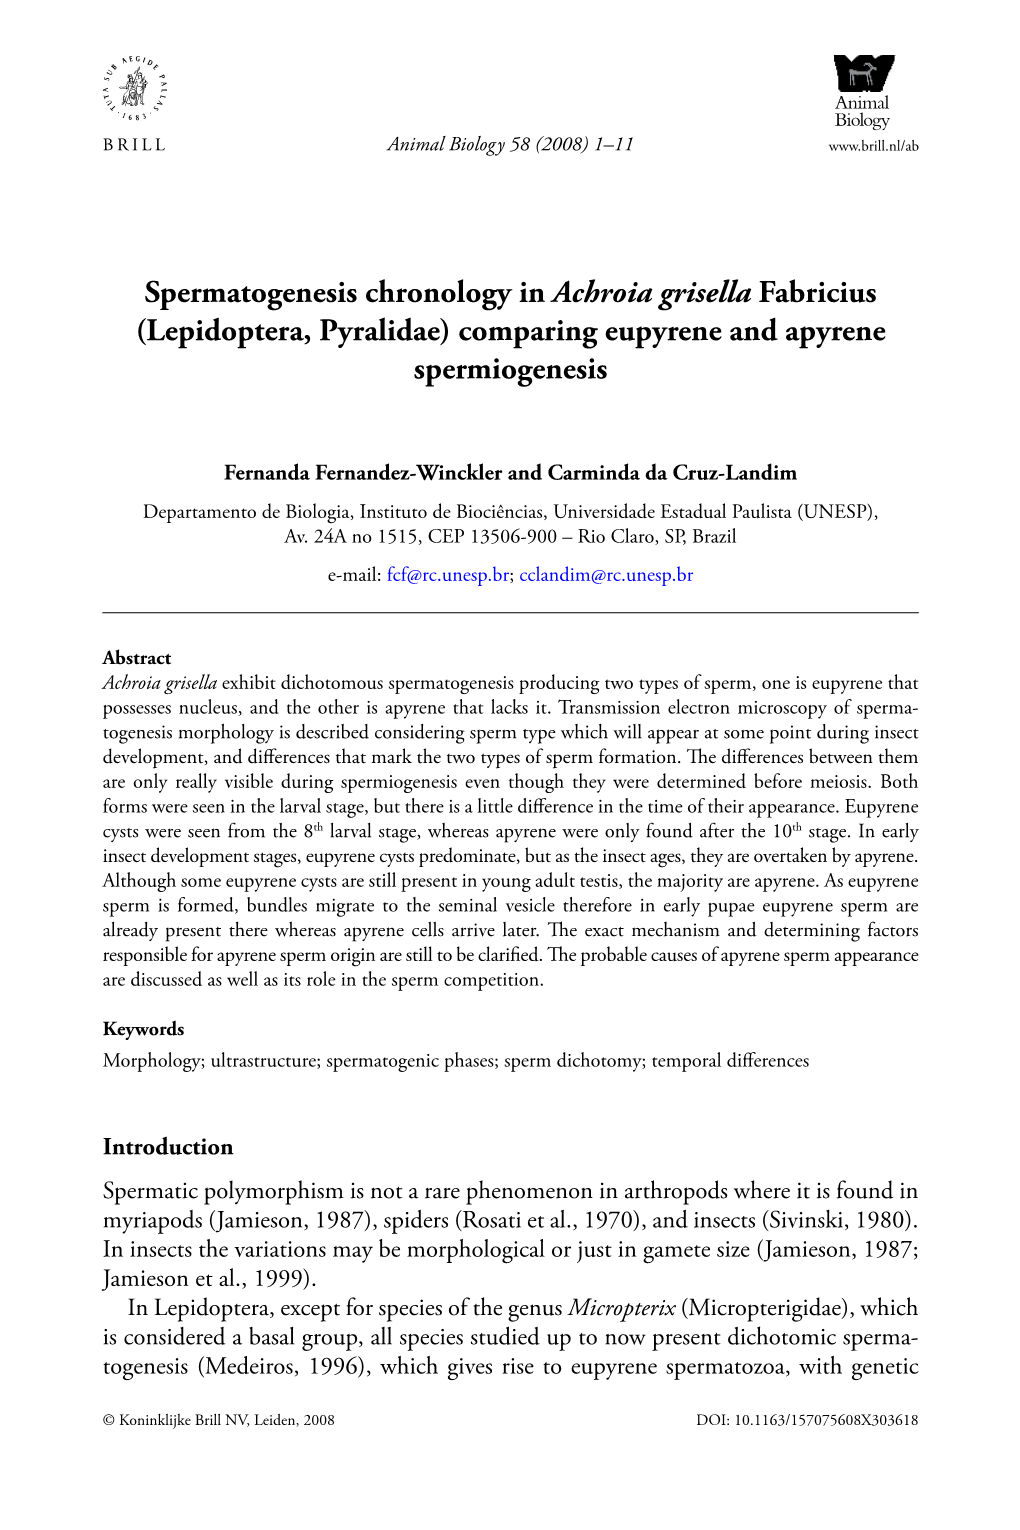 Spermatogenesis Chronology in Achroia Grisella Fabricius (Lepidoptera, Pyralidae) Comparing Eupyrene and Apyrene Spermiogenesis